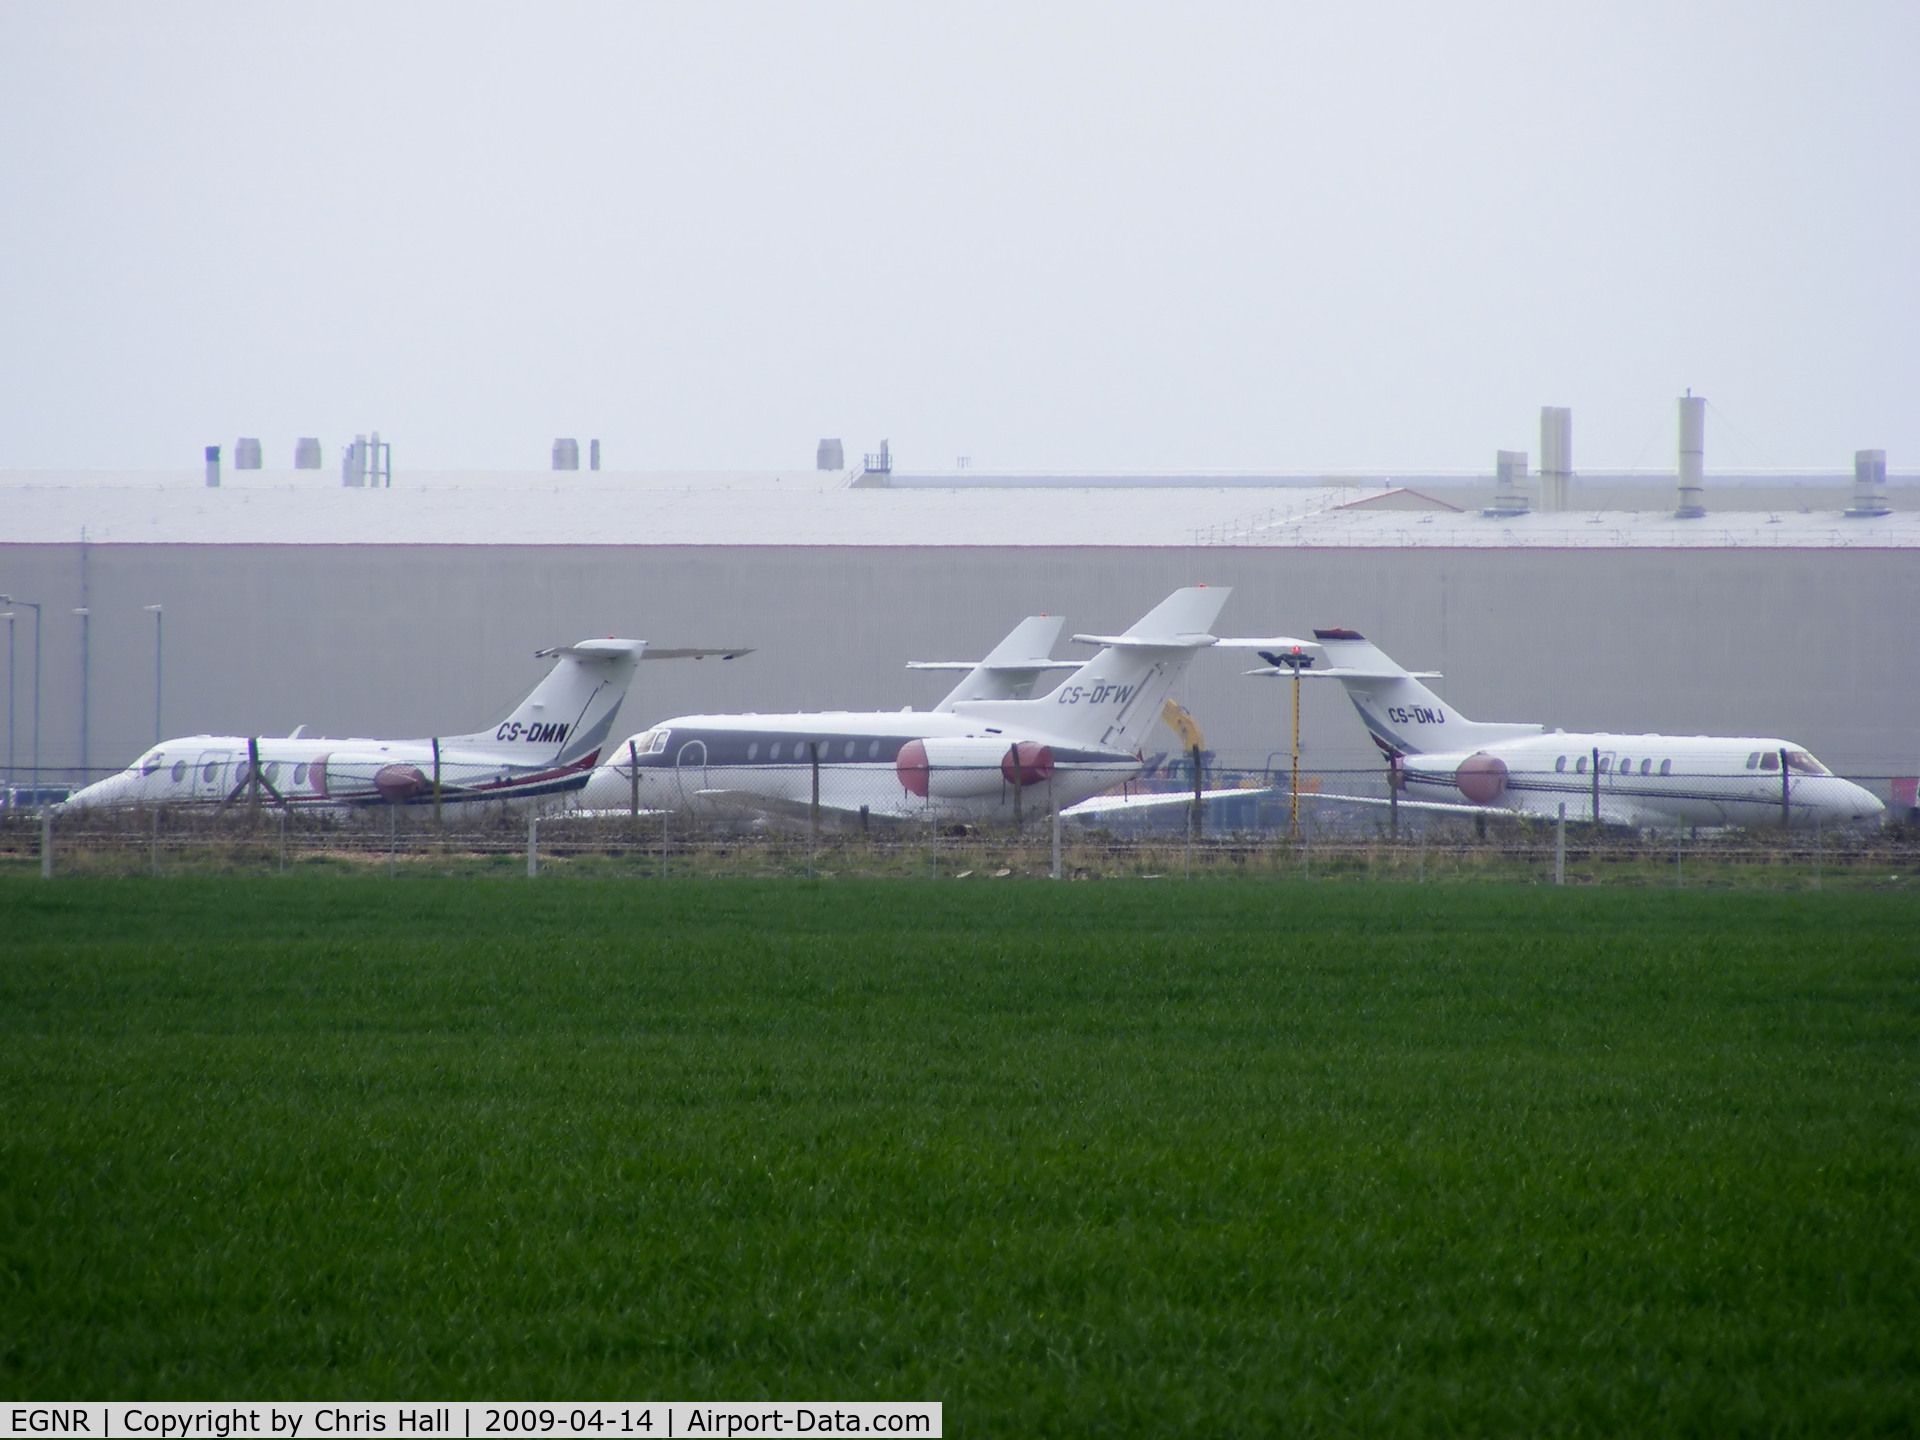 Hawarden Airport, Chester, England United Kingdom (EGNR) - from left to right; CS-DMN, CS-DFW, CS-DNJ